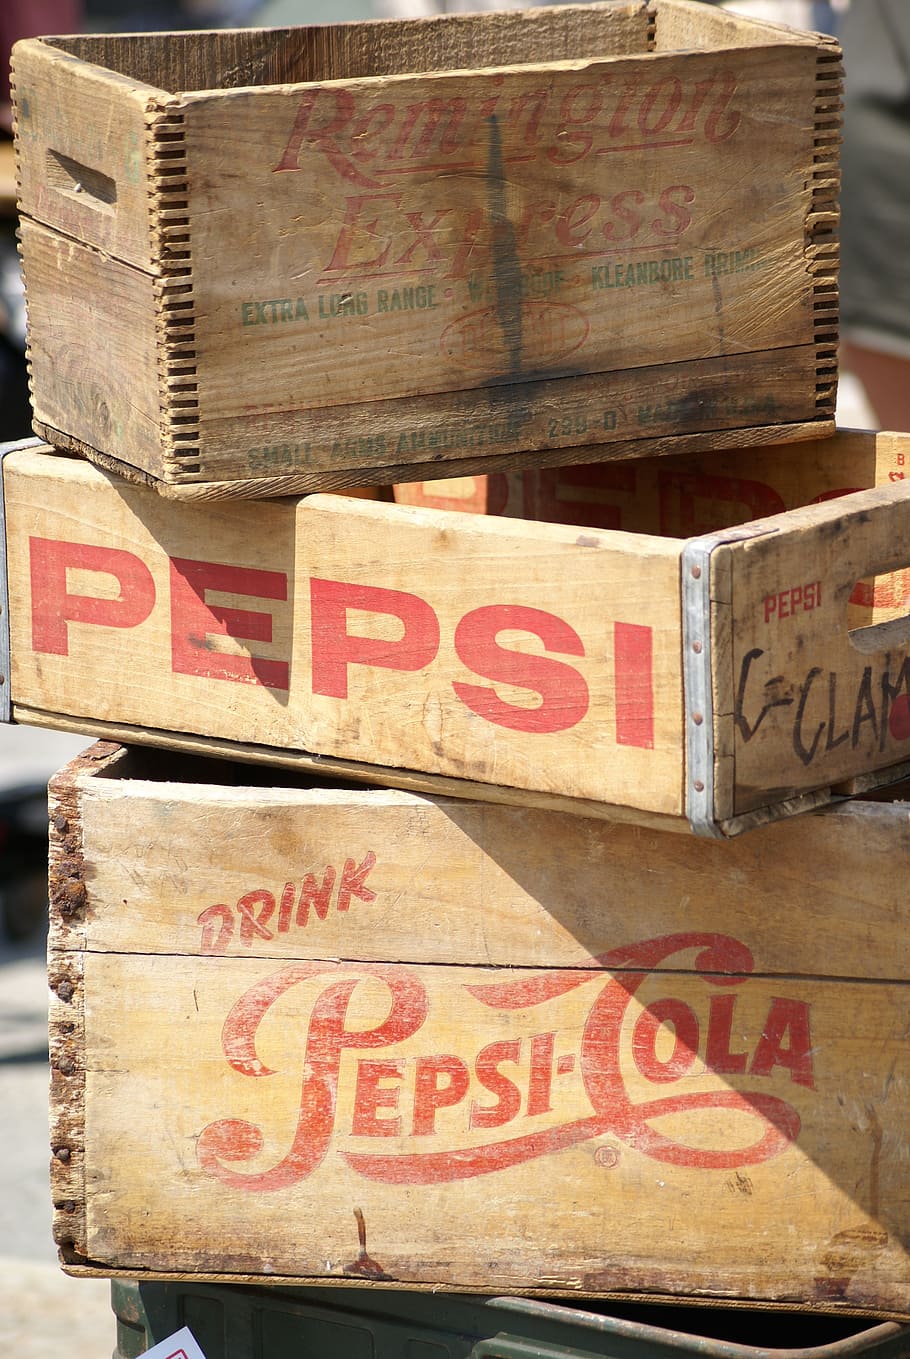 pepsi-cola logo, pepsi, pop, soda, vintage, marketing, crates, wood, wooden, stack